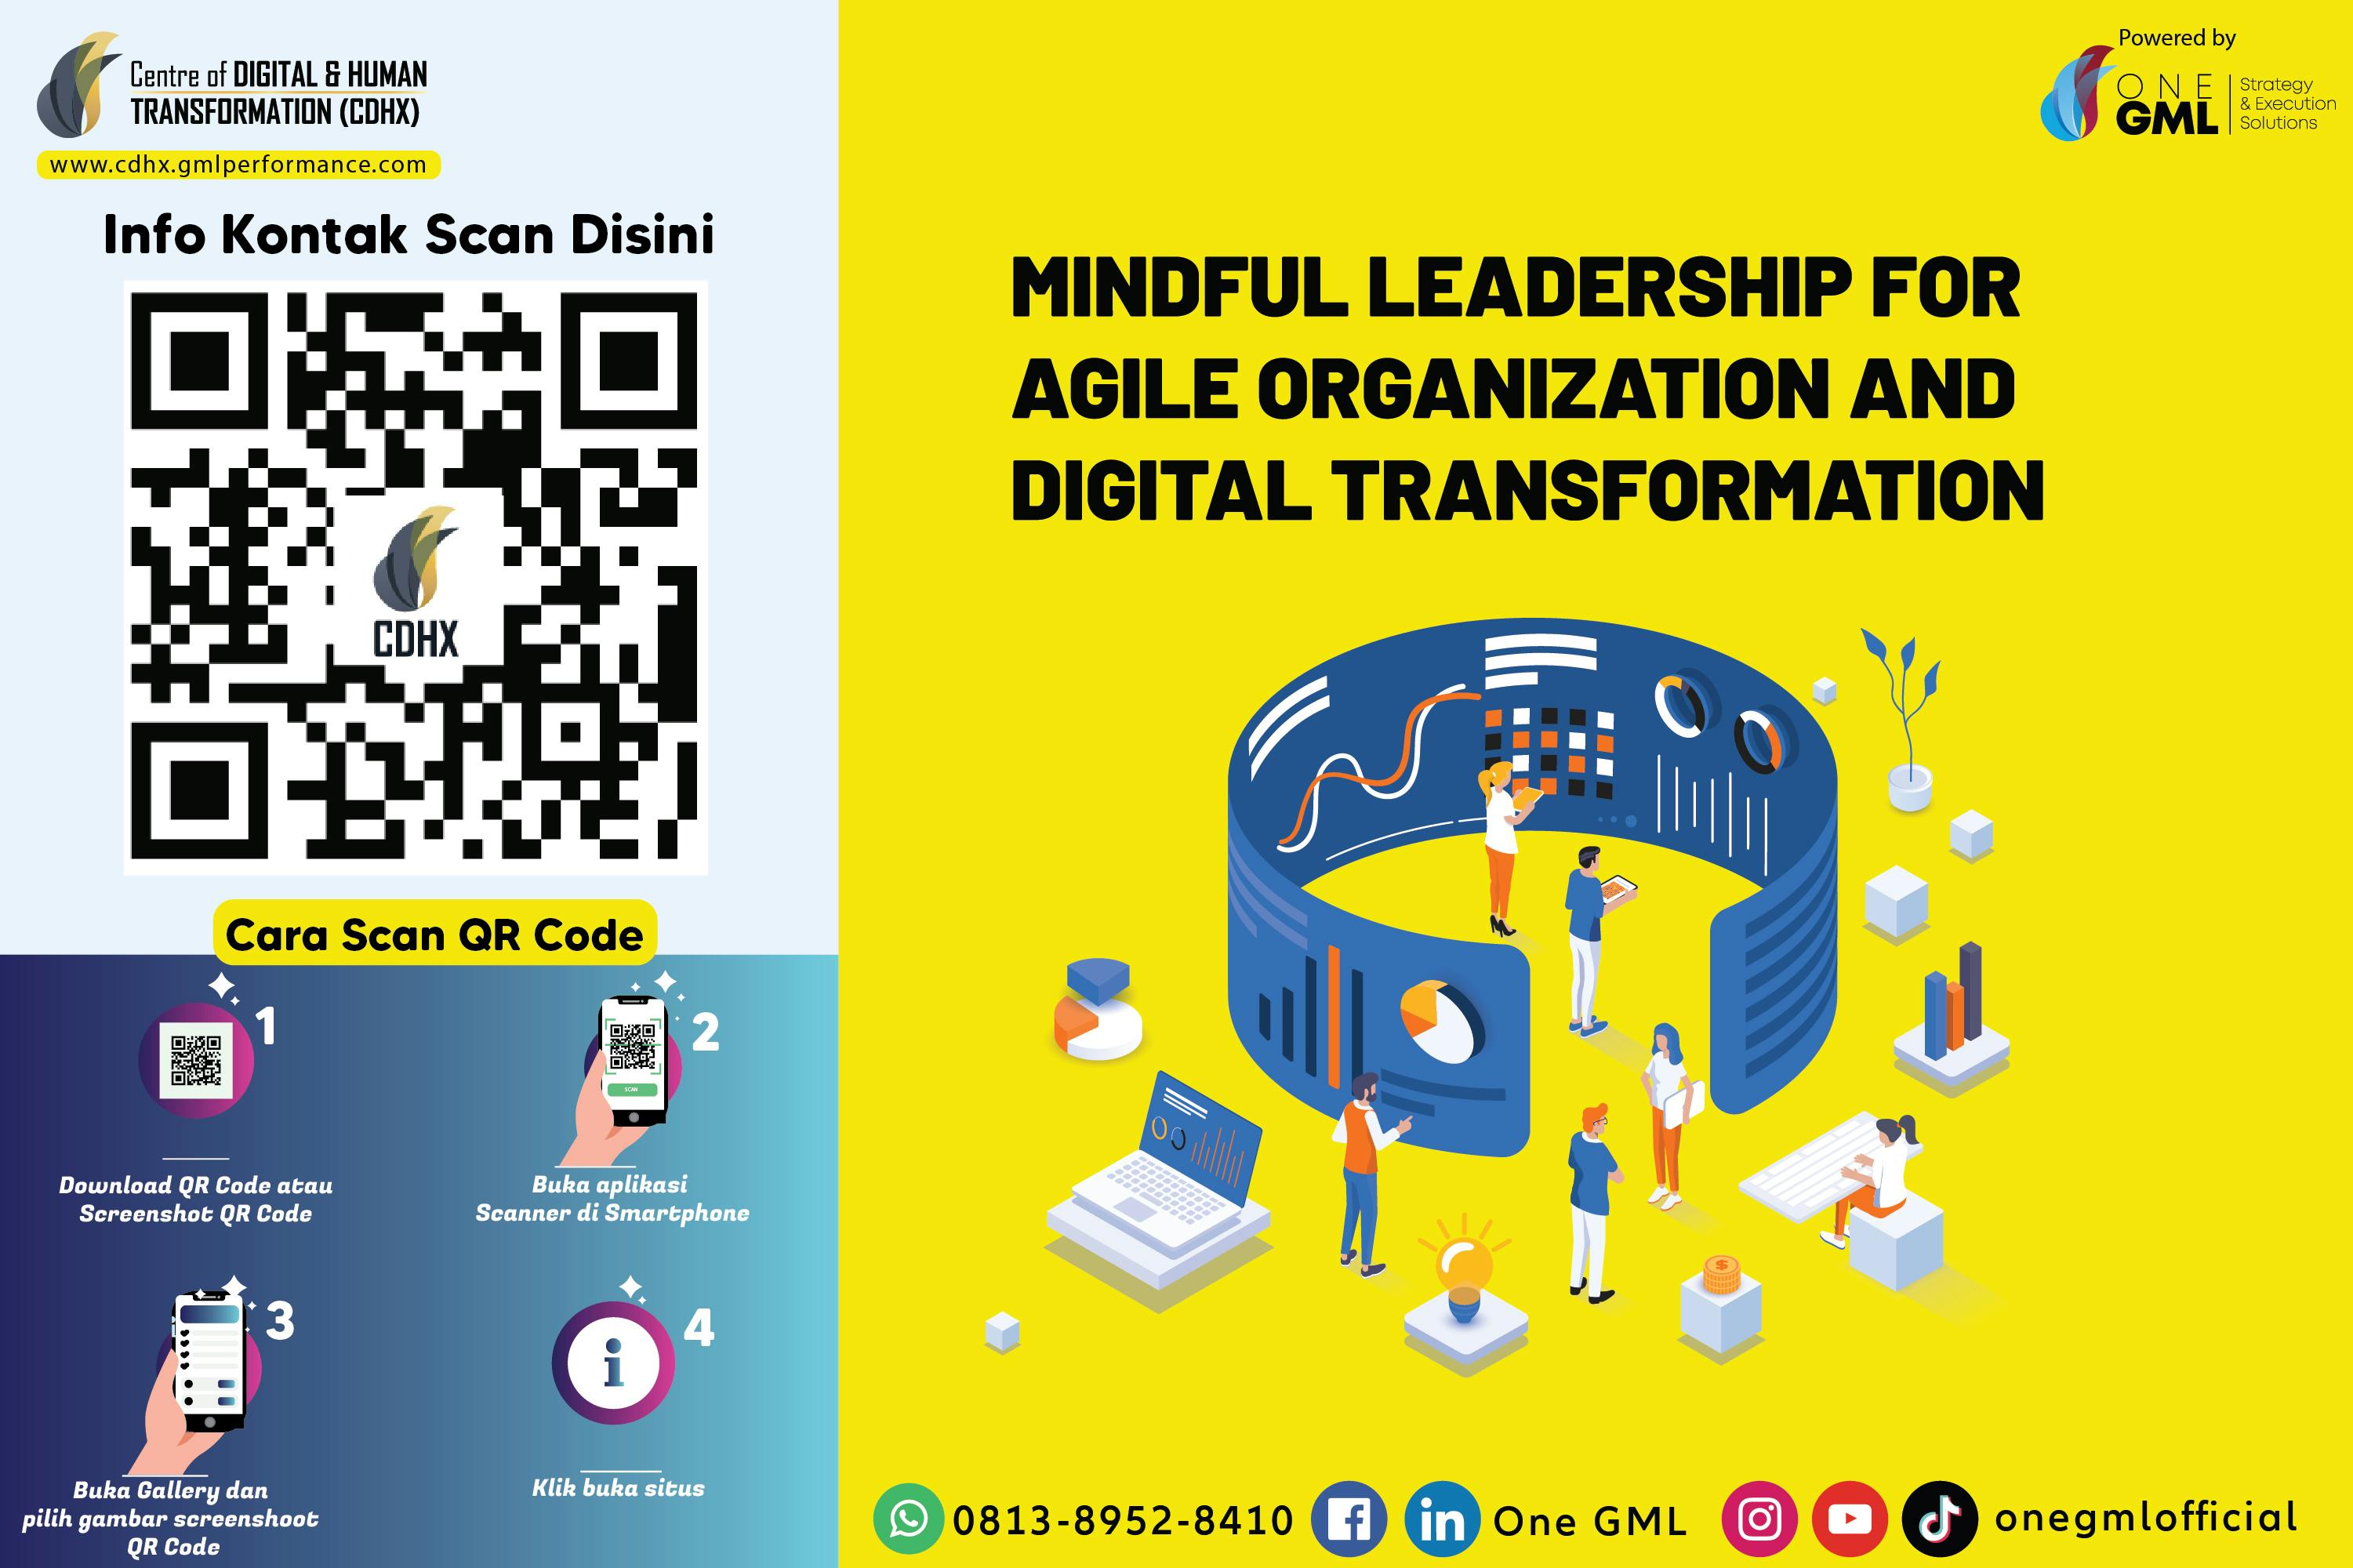 Mindfulness Leadership for Agile Organization and Digital Transformation